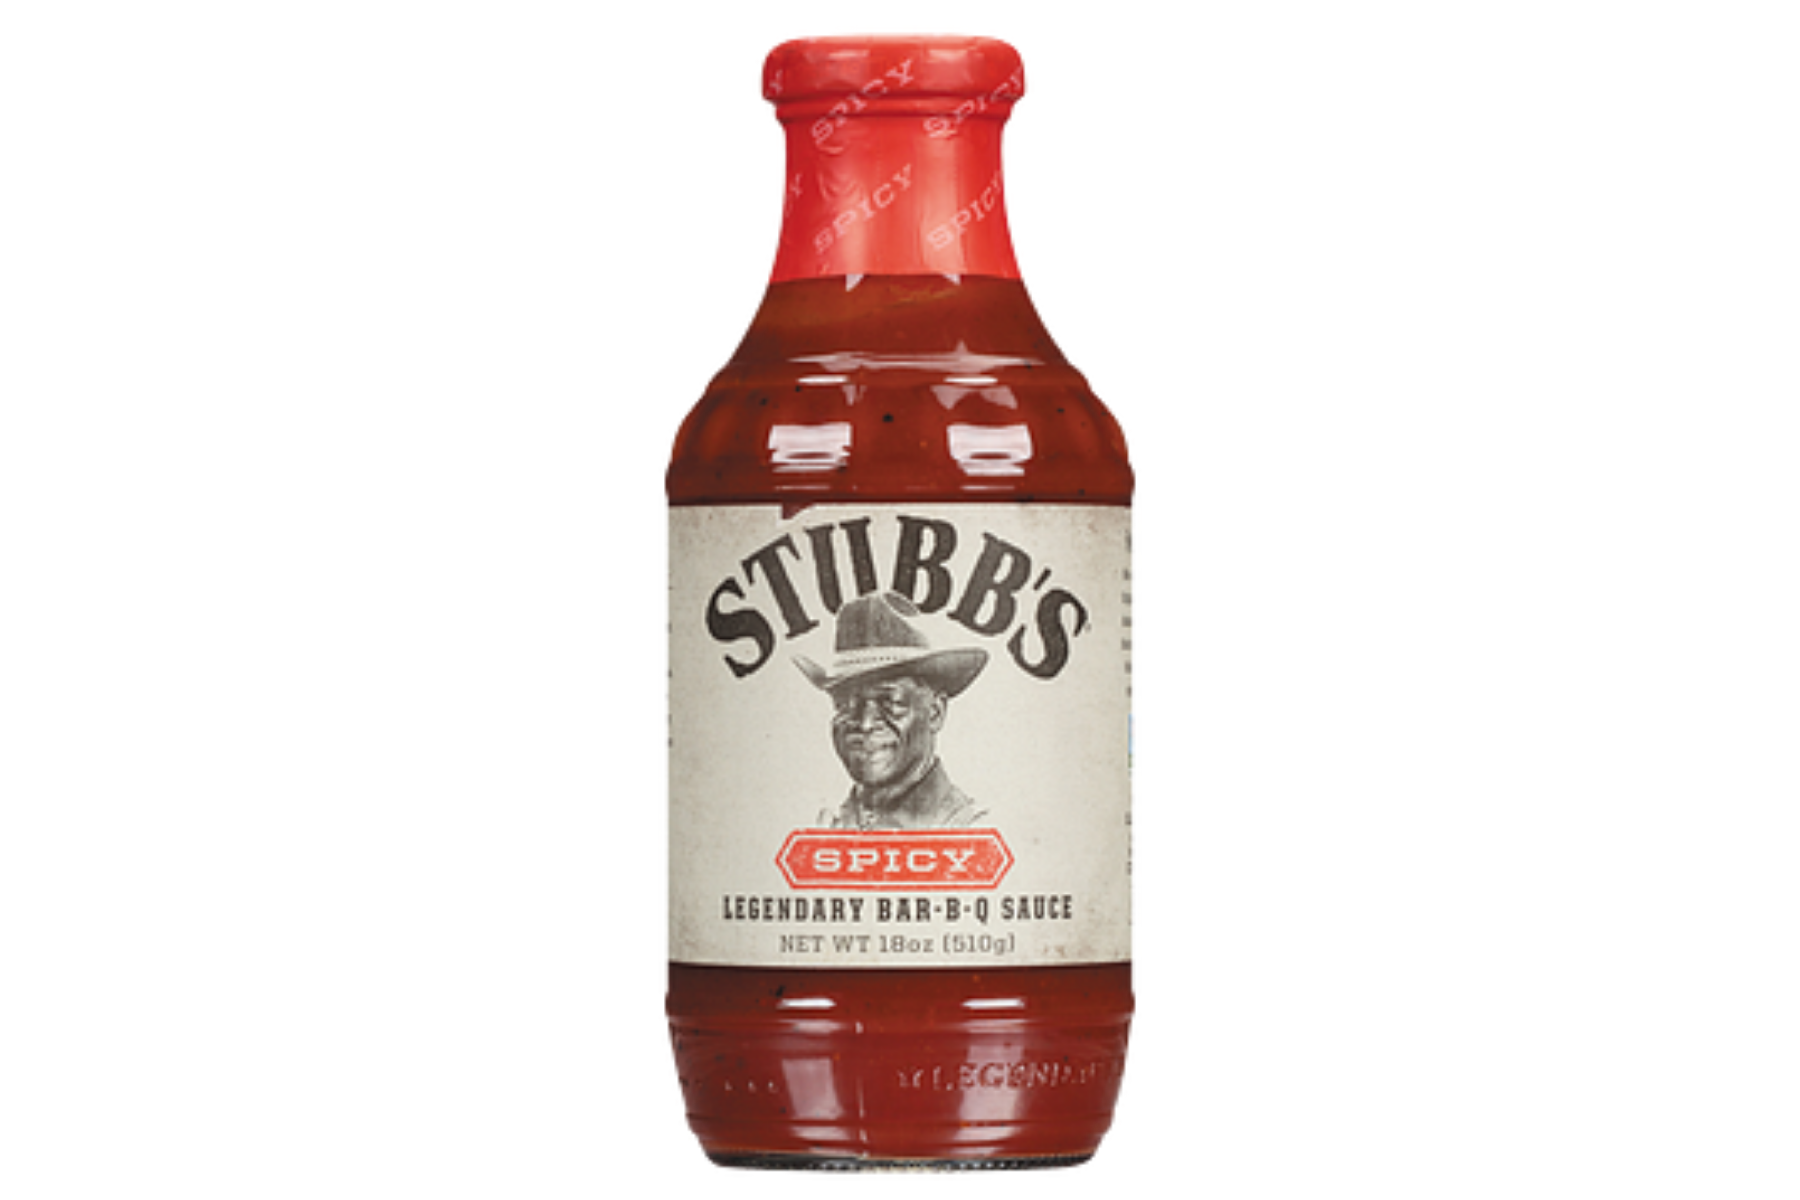 Red jar of Stubb's Spicy vegan BBQ sauce